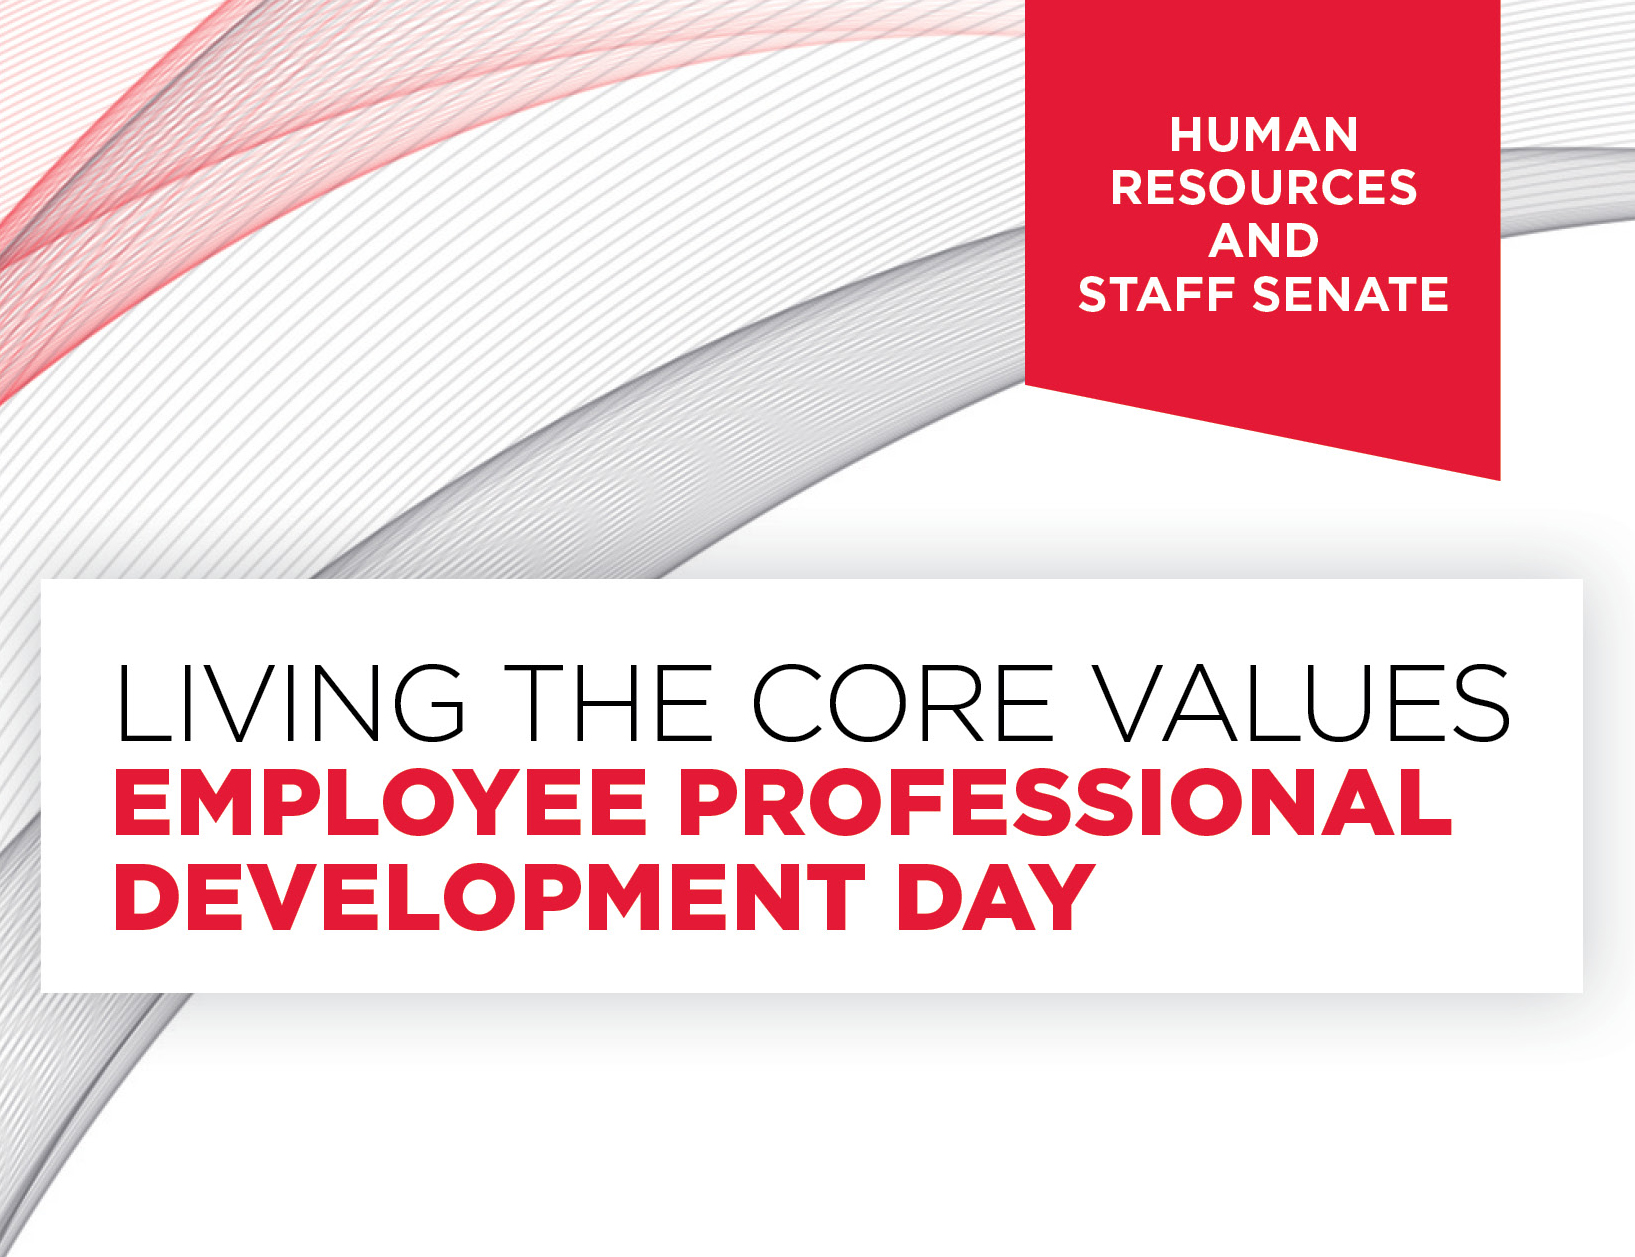 Employee Professional Development Day.